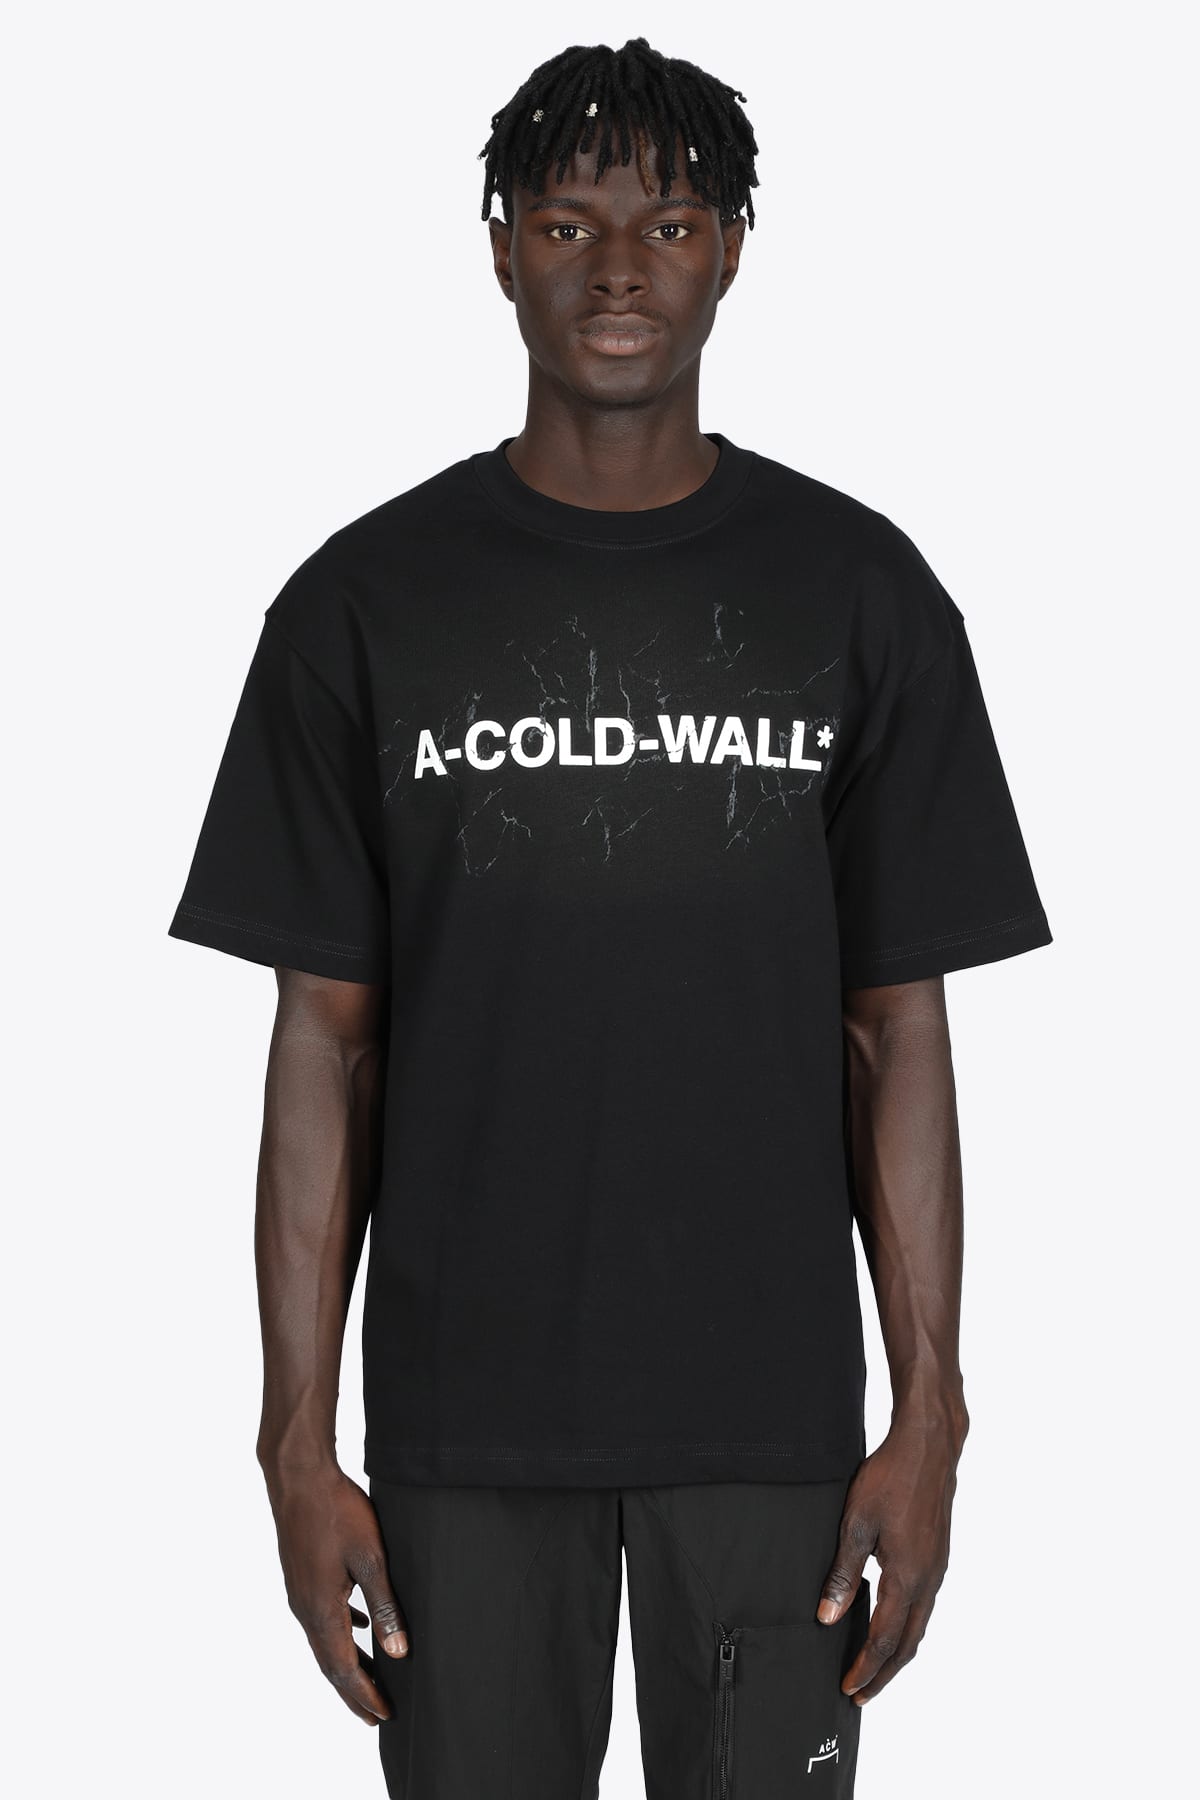 A-COLD-WALL Logo Ss T-shirt Black cotton logo t-shirt